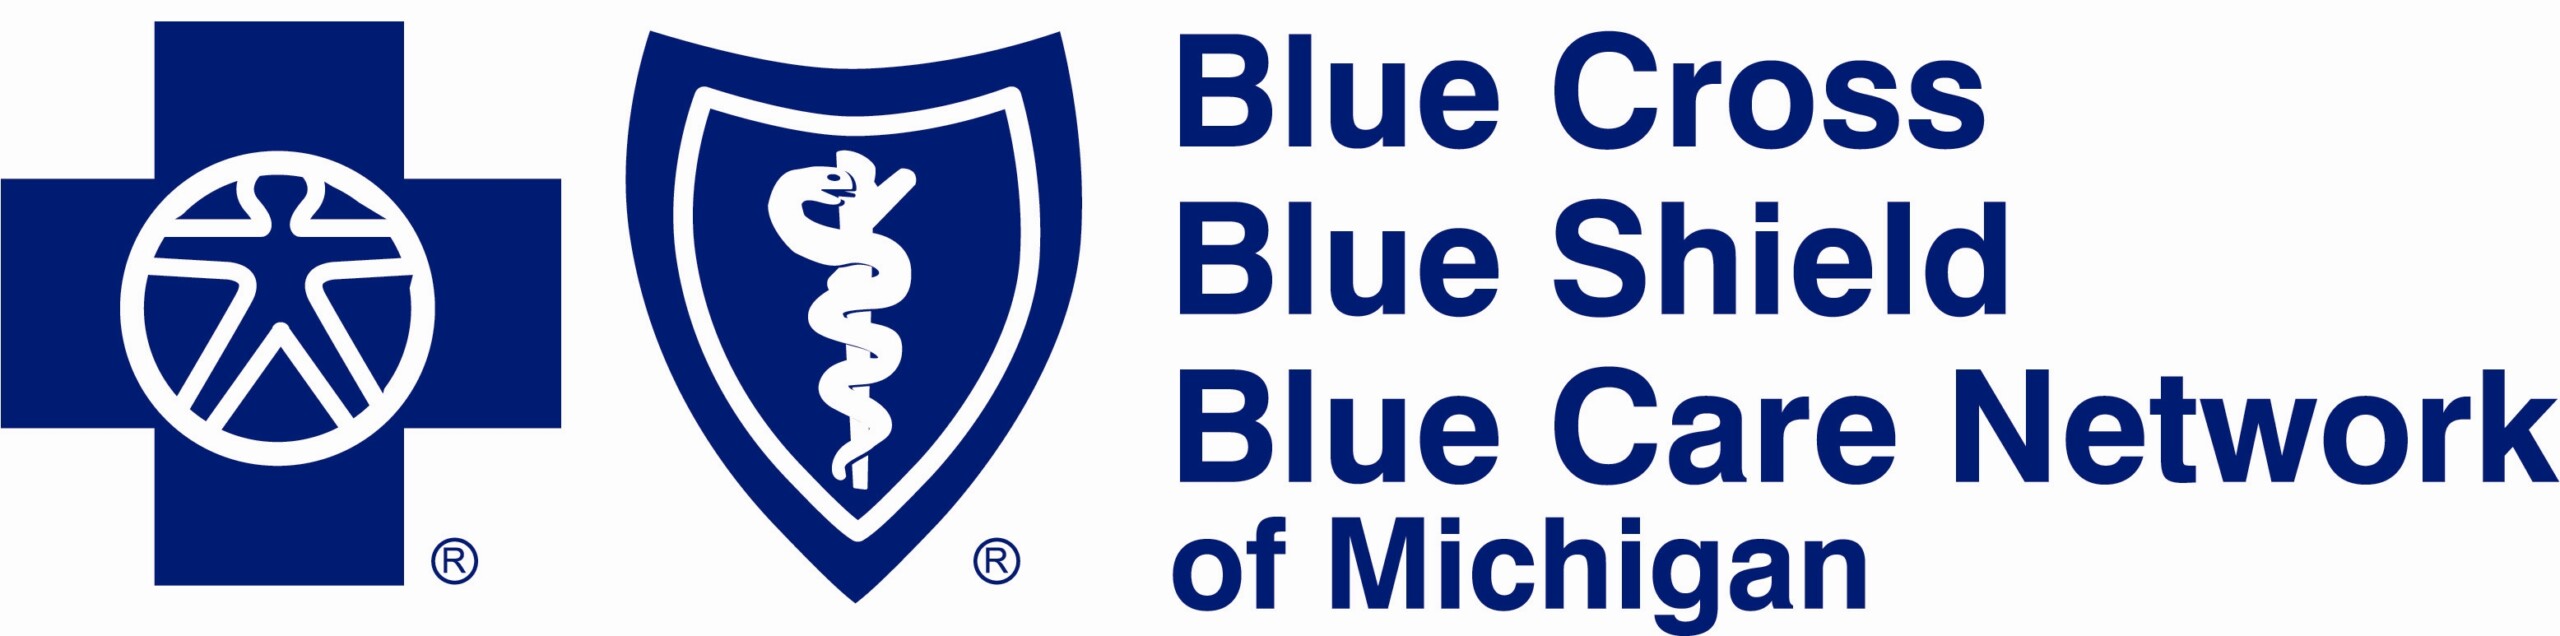 eBilling with Blue Cross Blue Shield of Michigan Austin Benefits Group